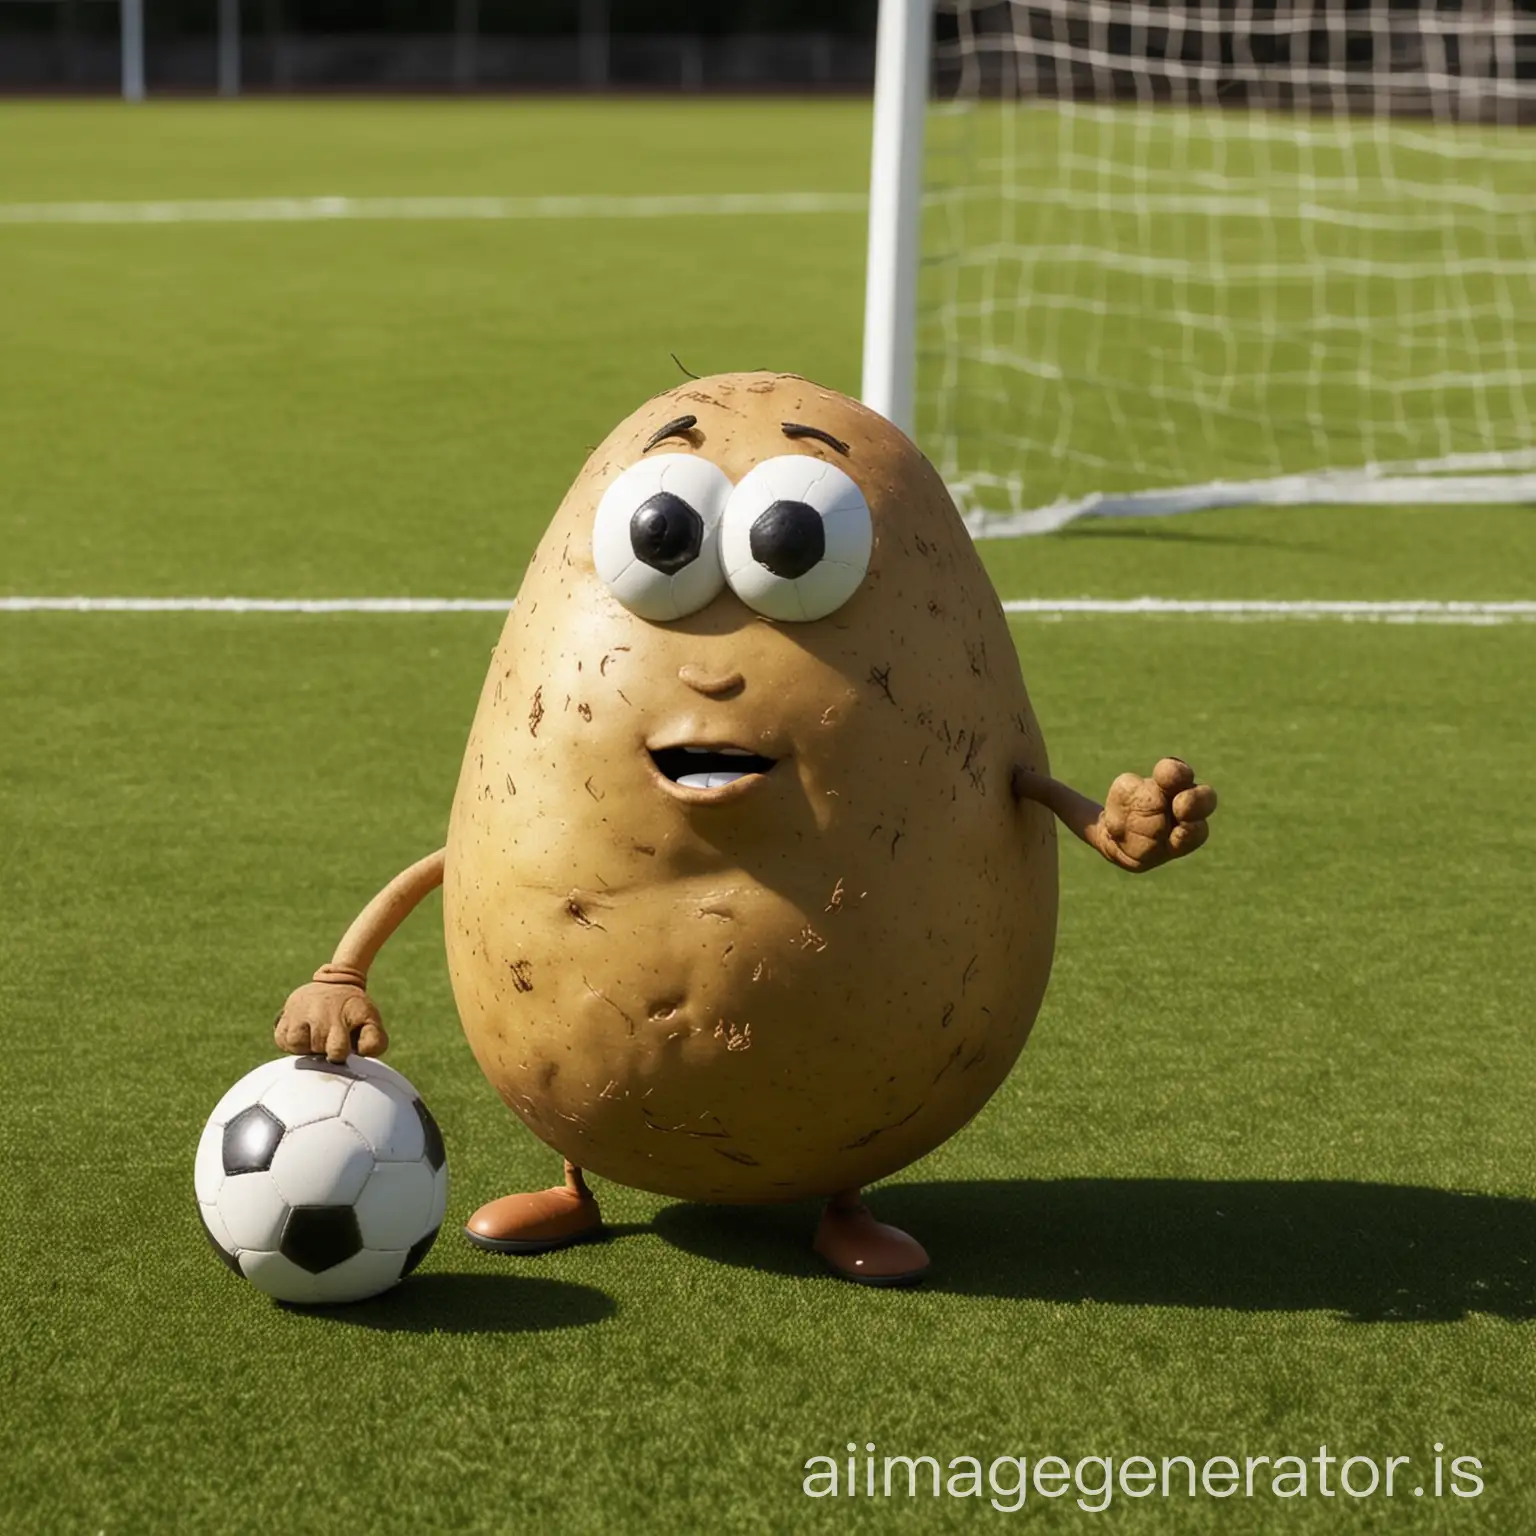 toby the potato scoring a goal on the soccer pitch